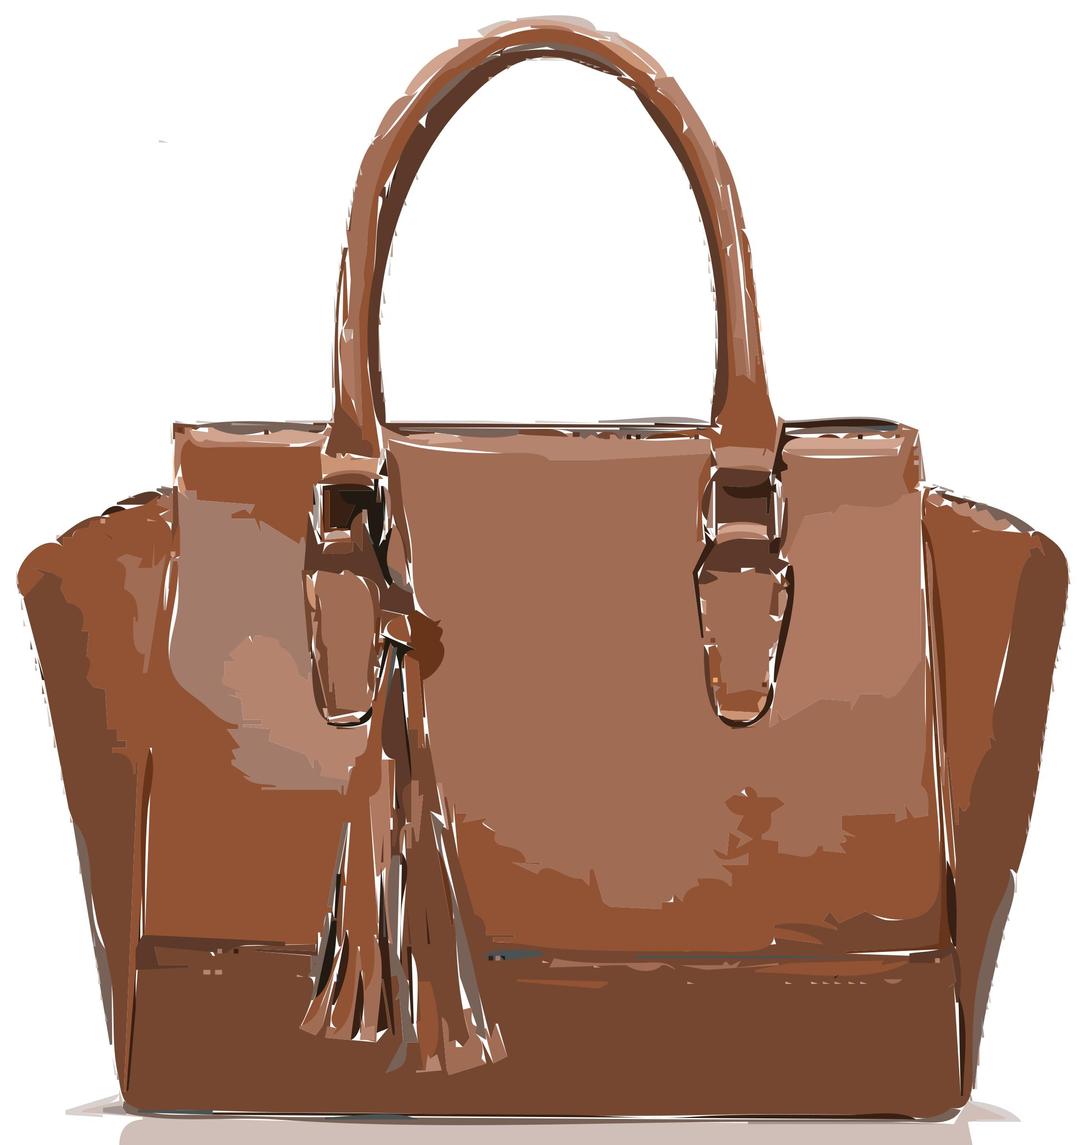 Brown Leather Bag NO LOGO png transparent